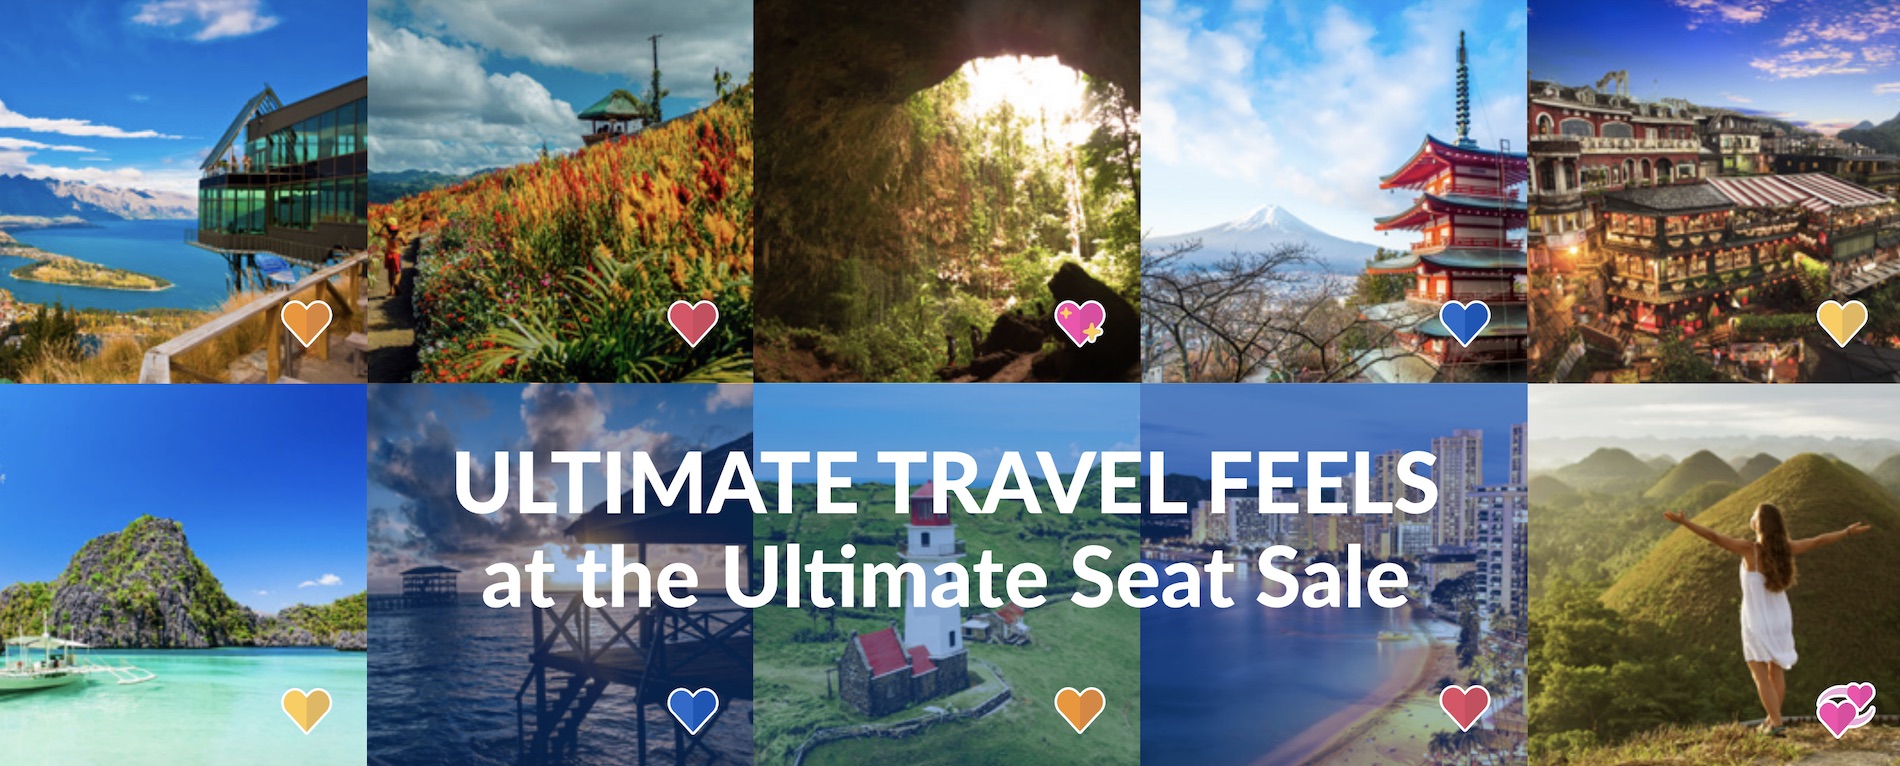 Vega Digital Awards Winner - Ultimate Travel Feels with the Ultimate Seat Sale, SVEN